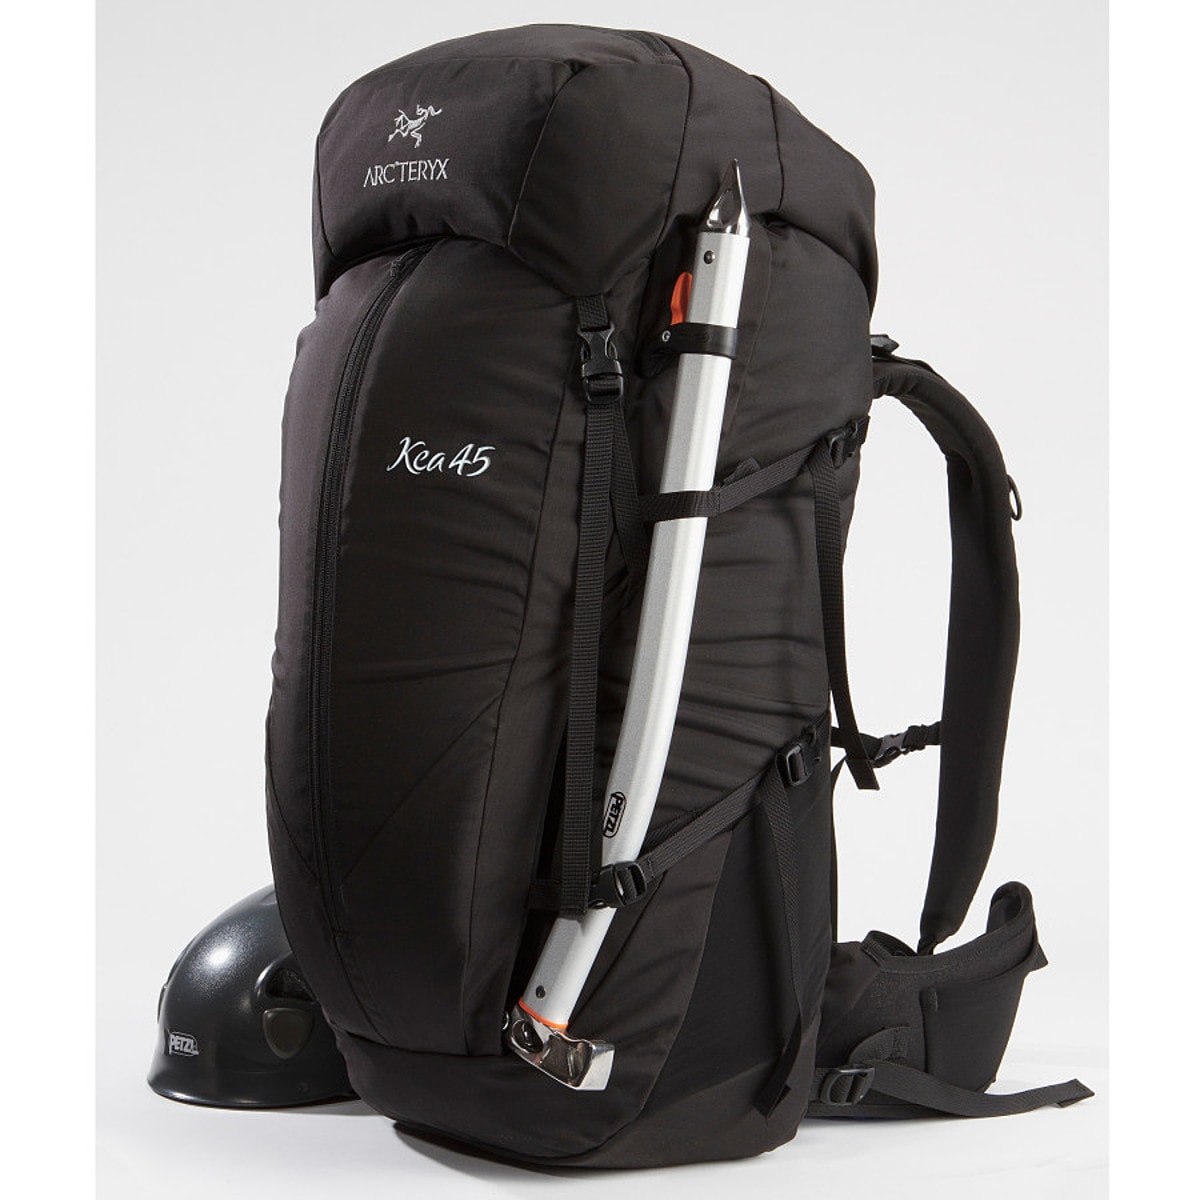 Arc'teryx Kea 45 Backpack - 2624-2868cu in - Hike & Camp